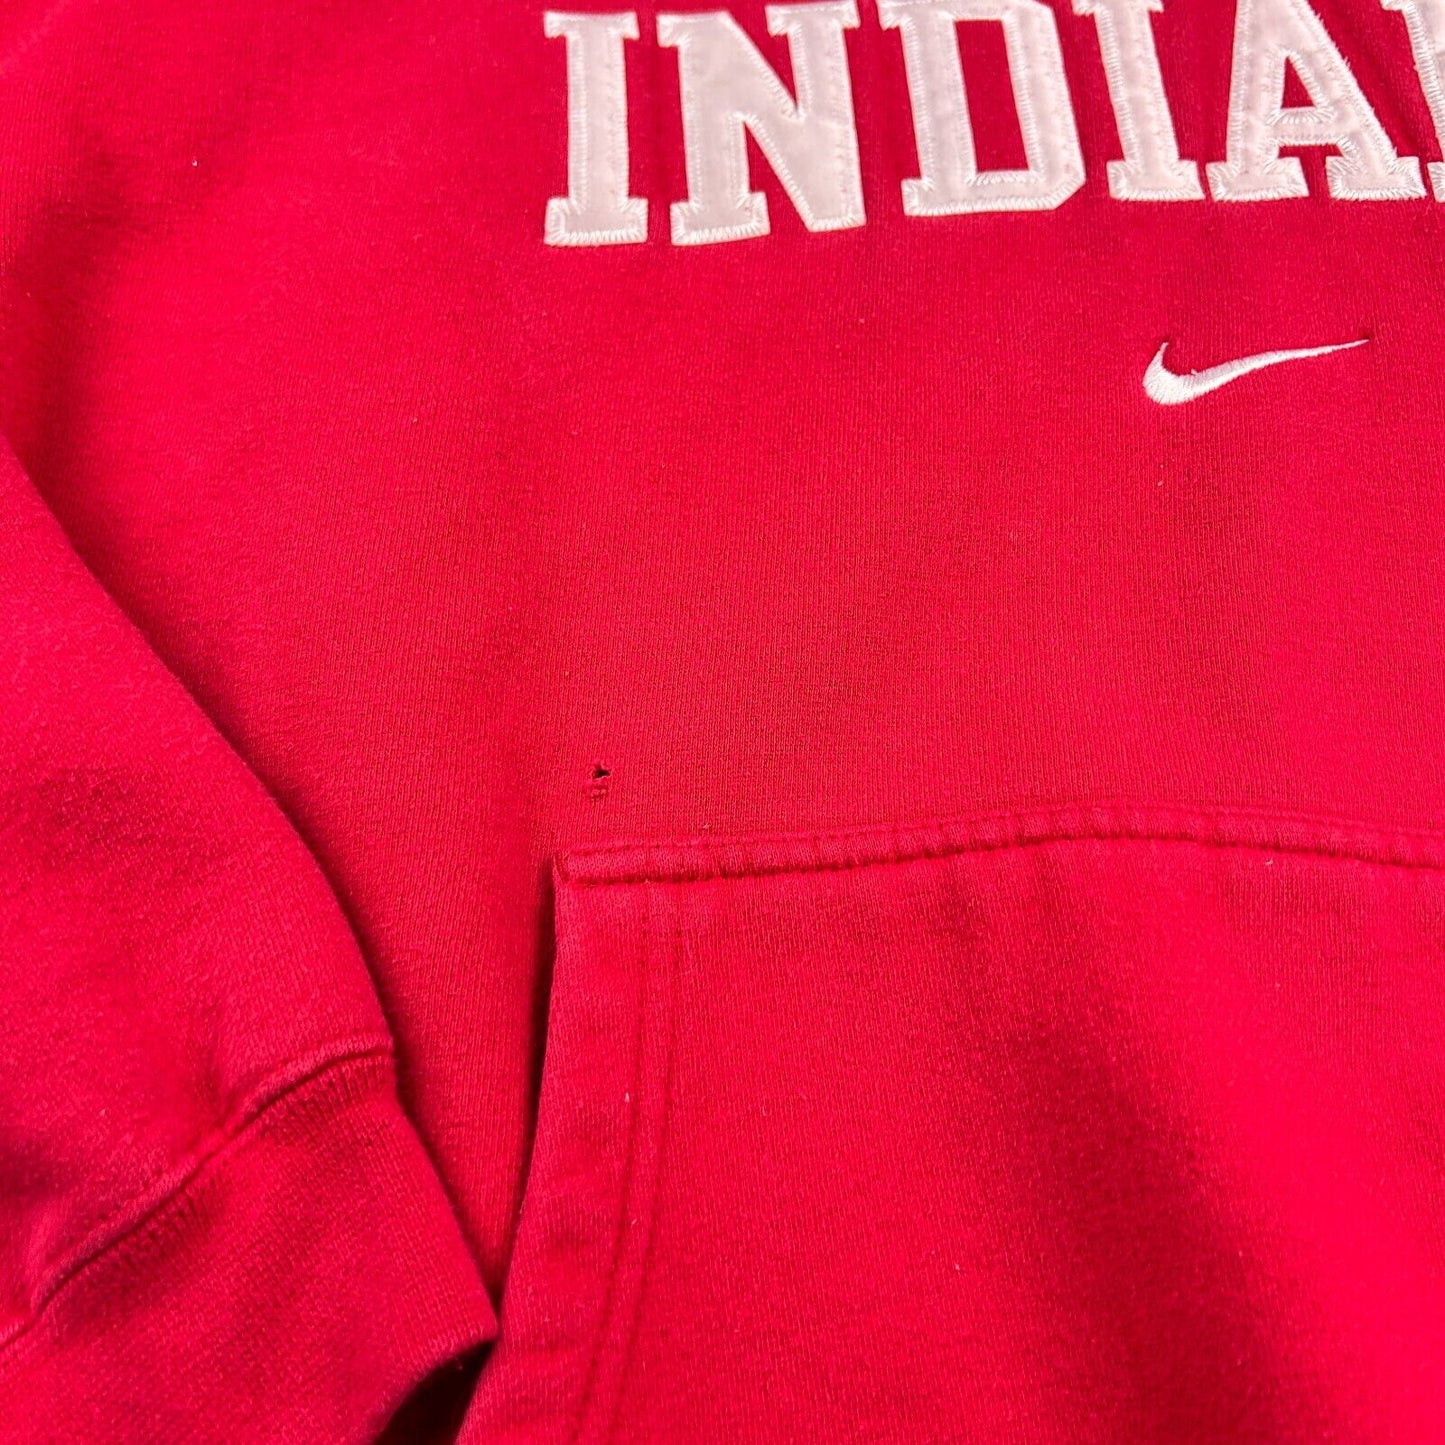 VINTAGE | NIKE Mid Swoosh Indiana Red Hoodie Sweater sz XXL Adult